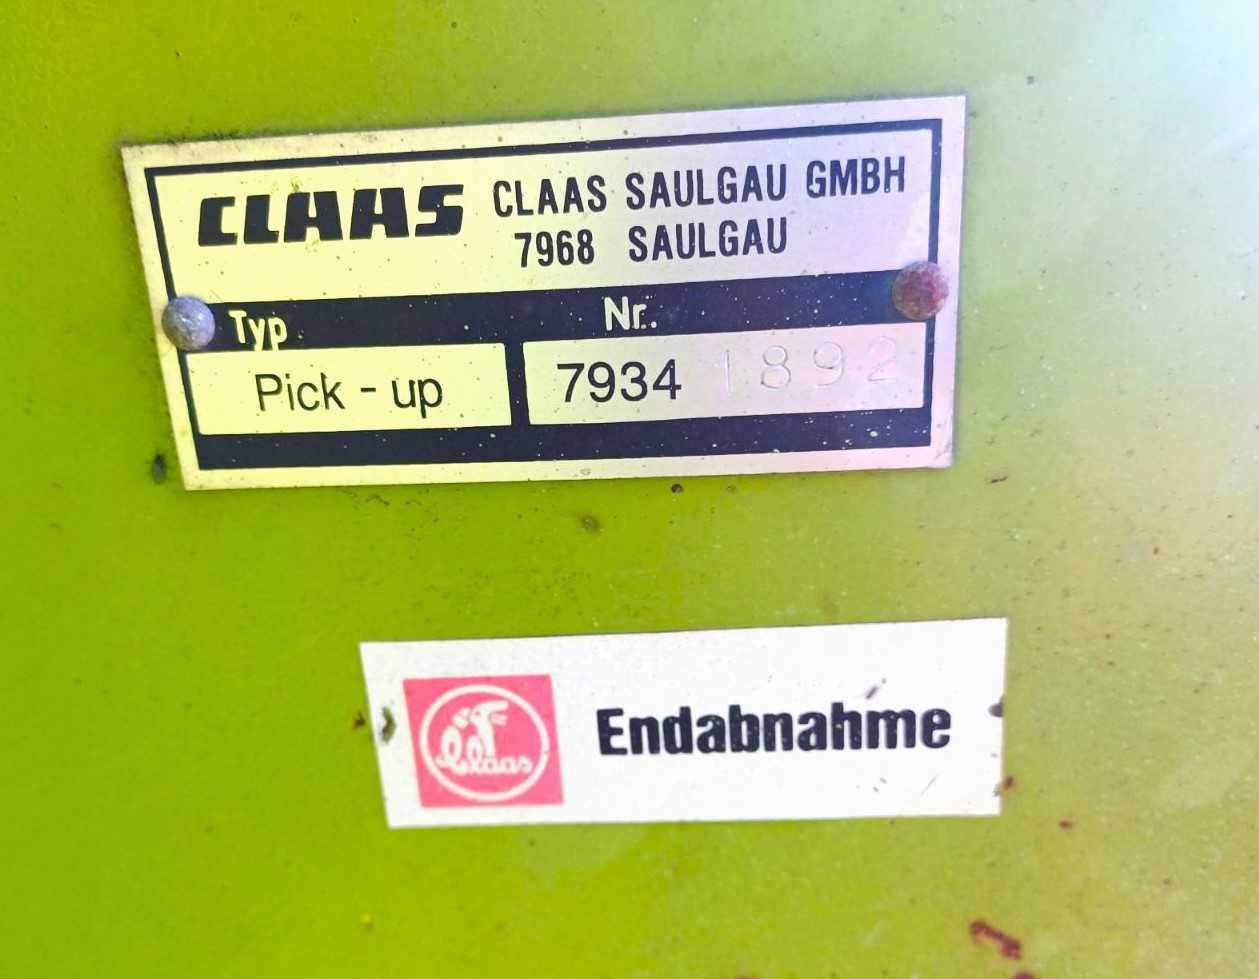 Claas saulgau gmbh 7968 Pick - up 7934